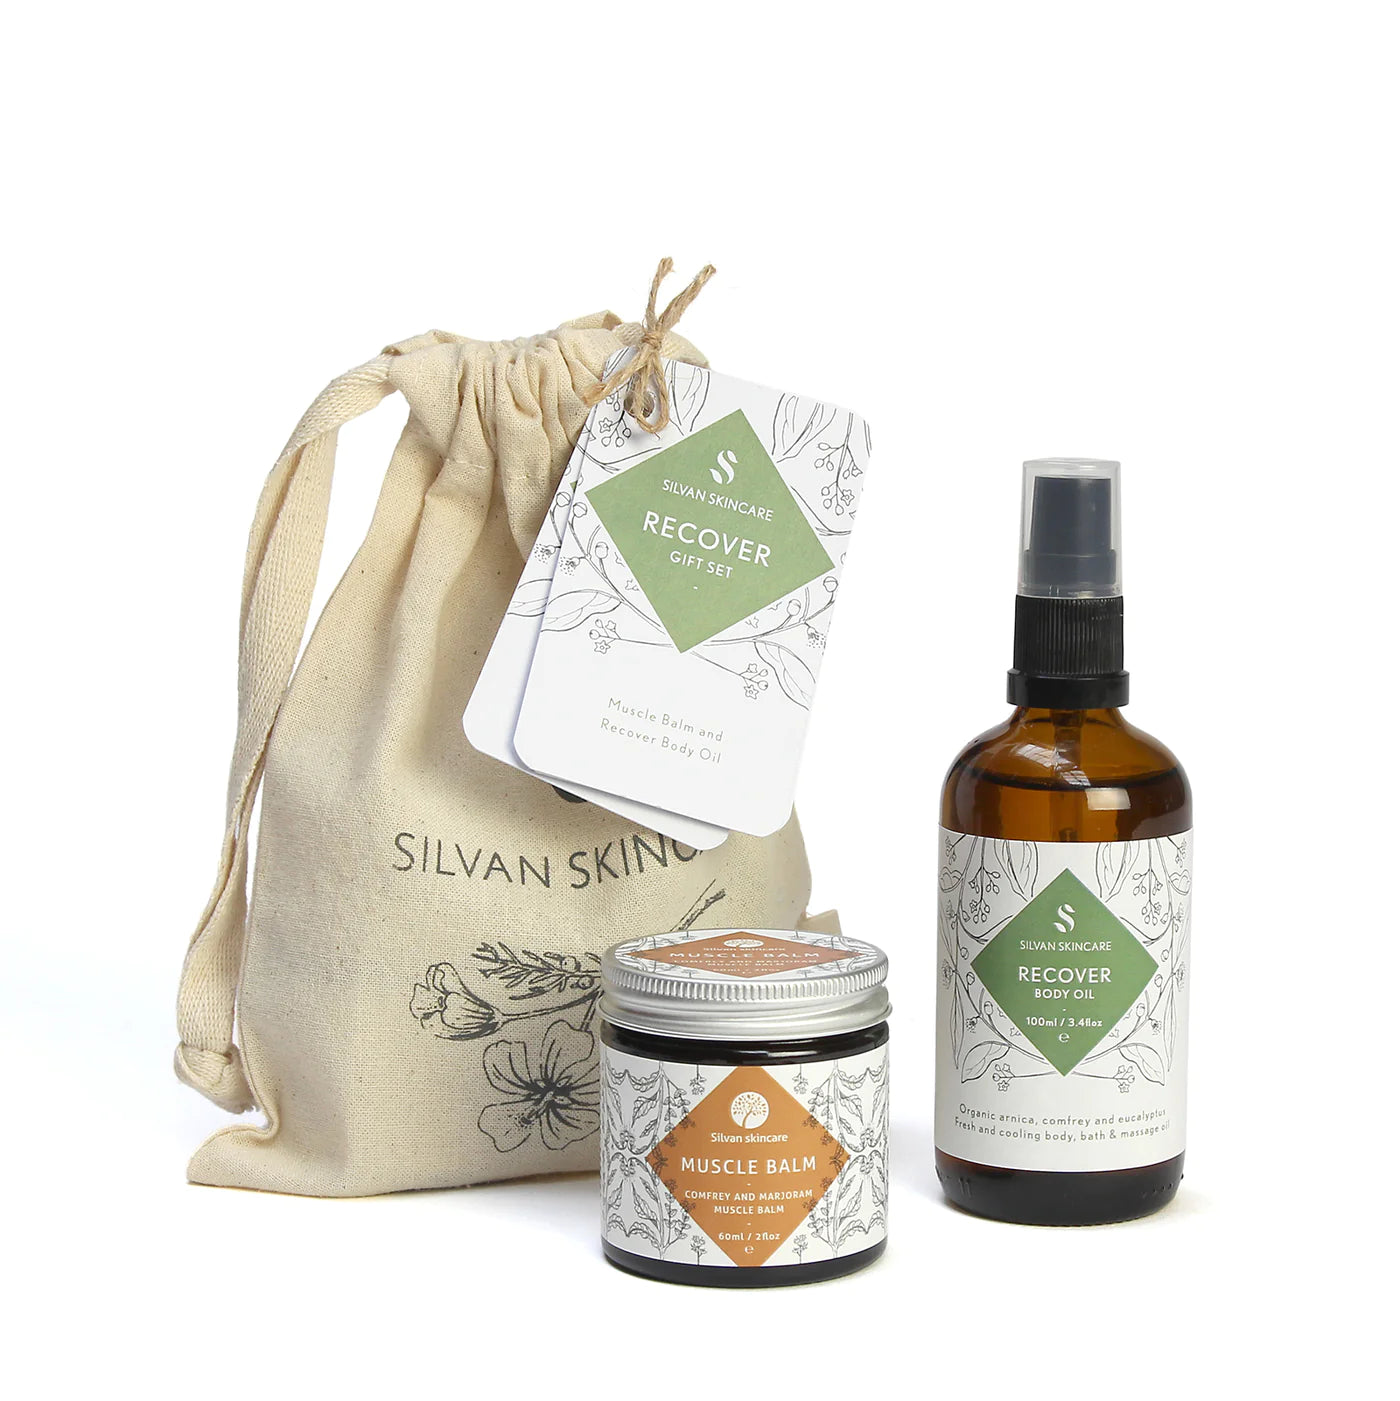 Silvan Skincare Recover Gift Set